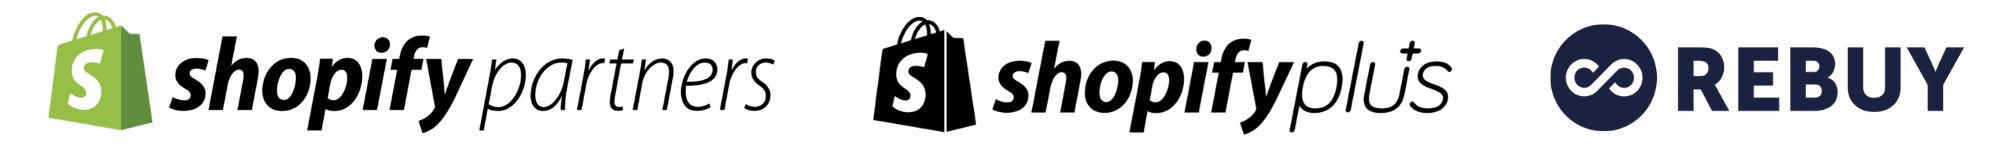 Xfacta Design | Shopify Partner -Rebuy Partner - Wordpress - Woocommerce logos